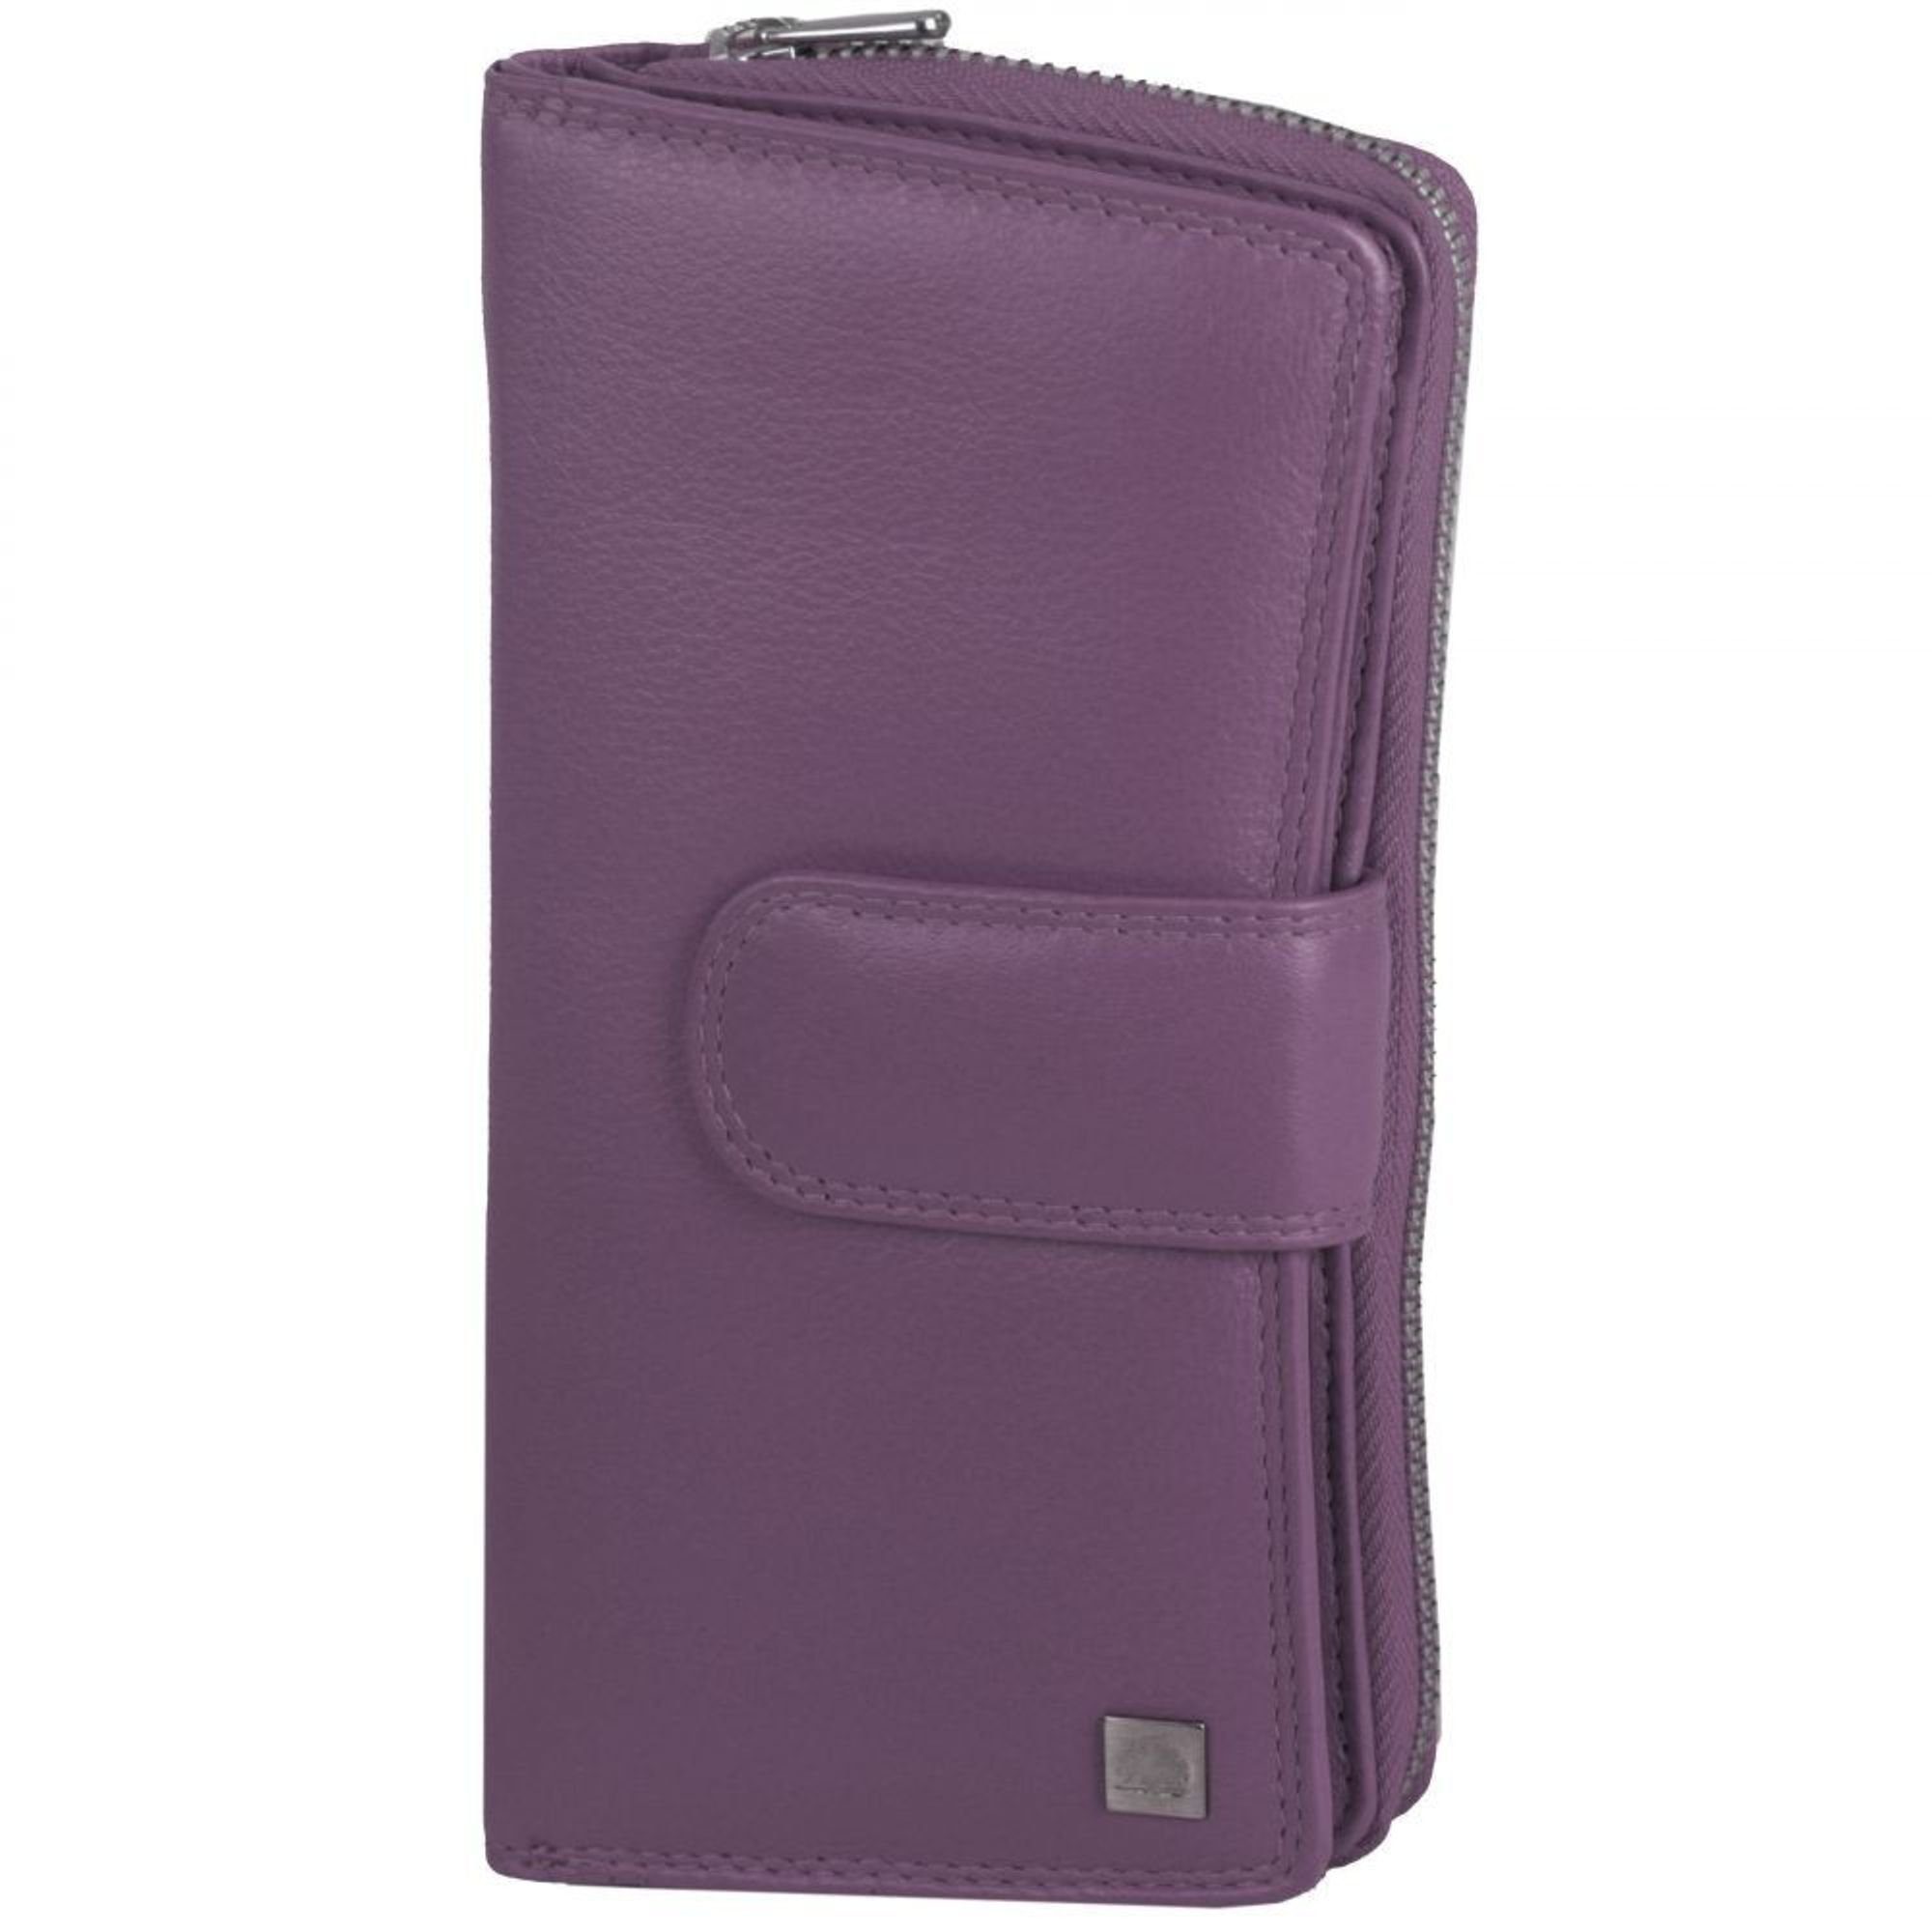 Greenburry Geldbörse Spongy, Leder purple